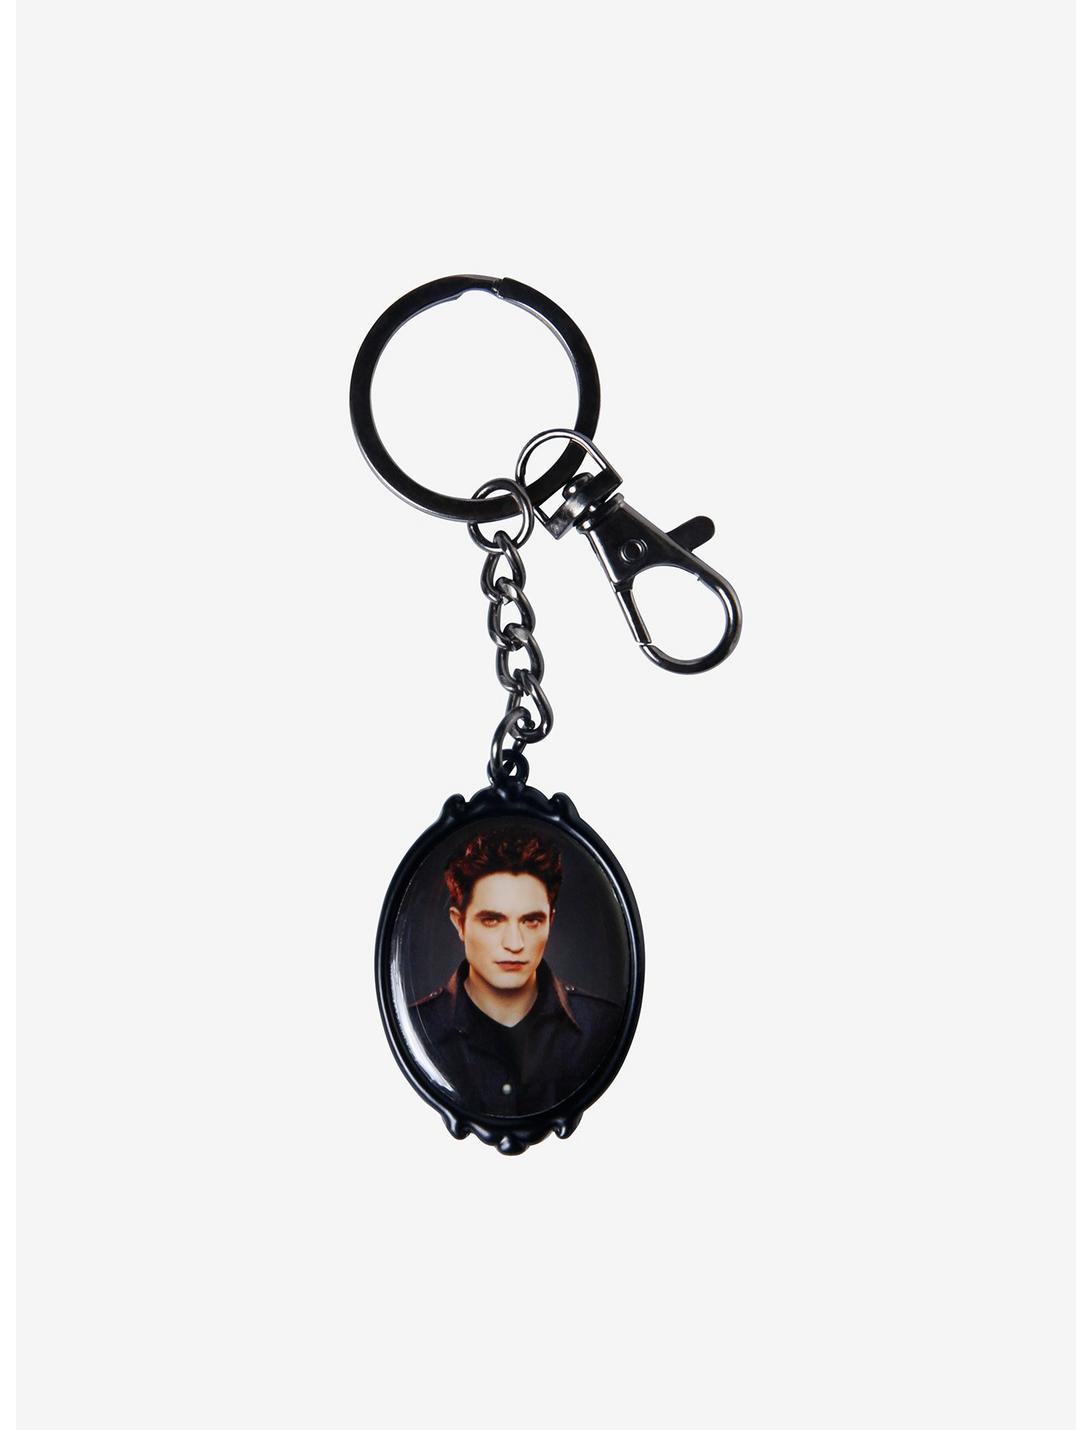 Twilight Edward Cullen Portrait Key Chain